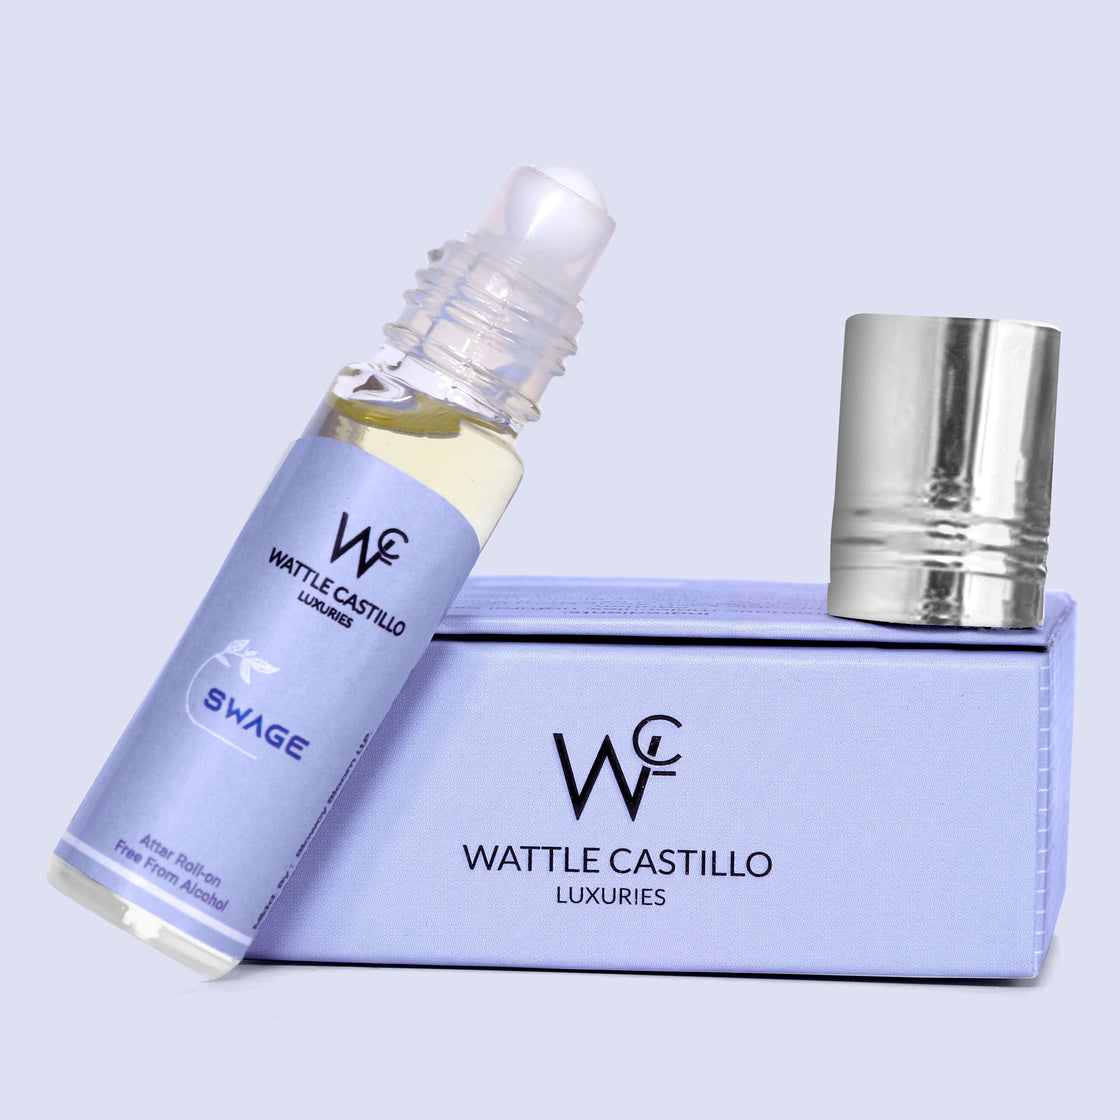 Wattle Castillo Friduas And Swage Premium Luxury 100% Non Alcoholic Long Lasting Roll On Attar Combo Perfume For Unisex - Wattle Castillo